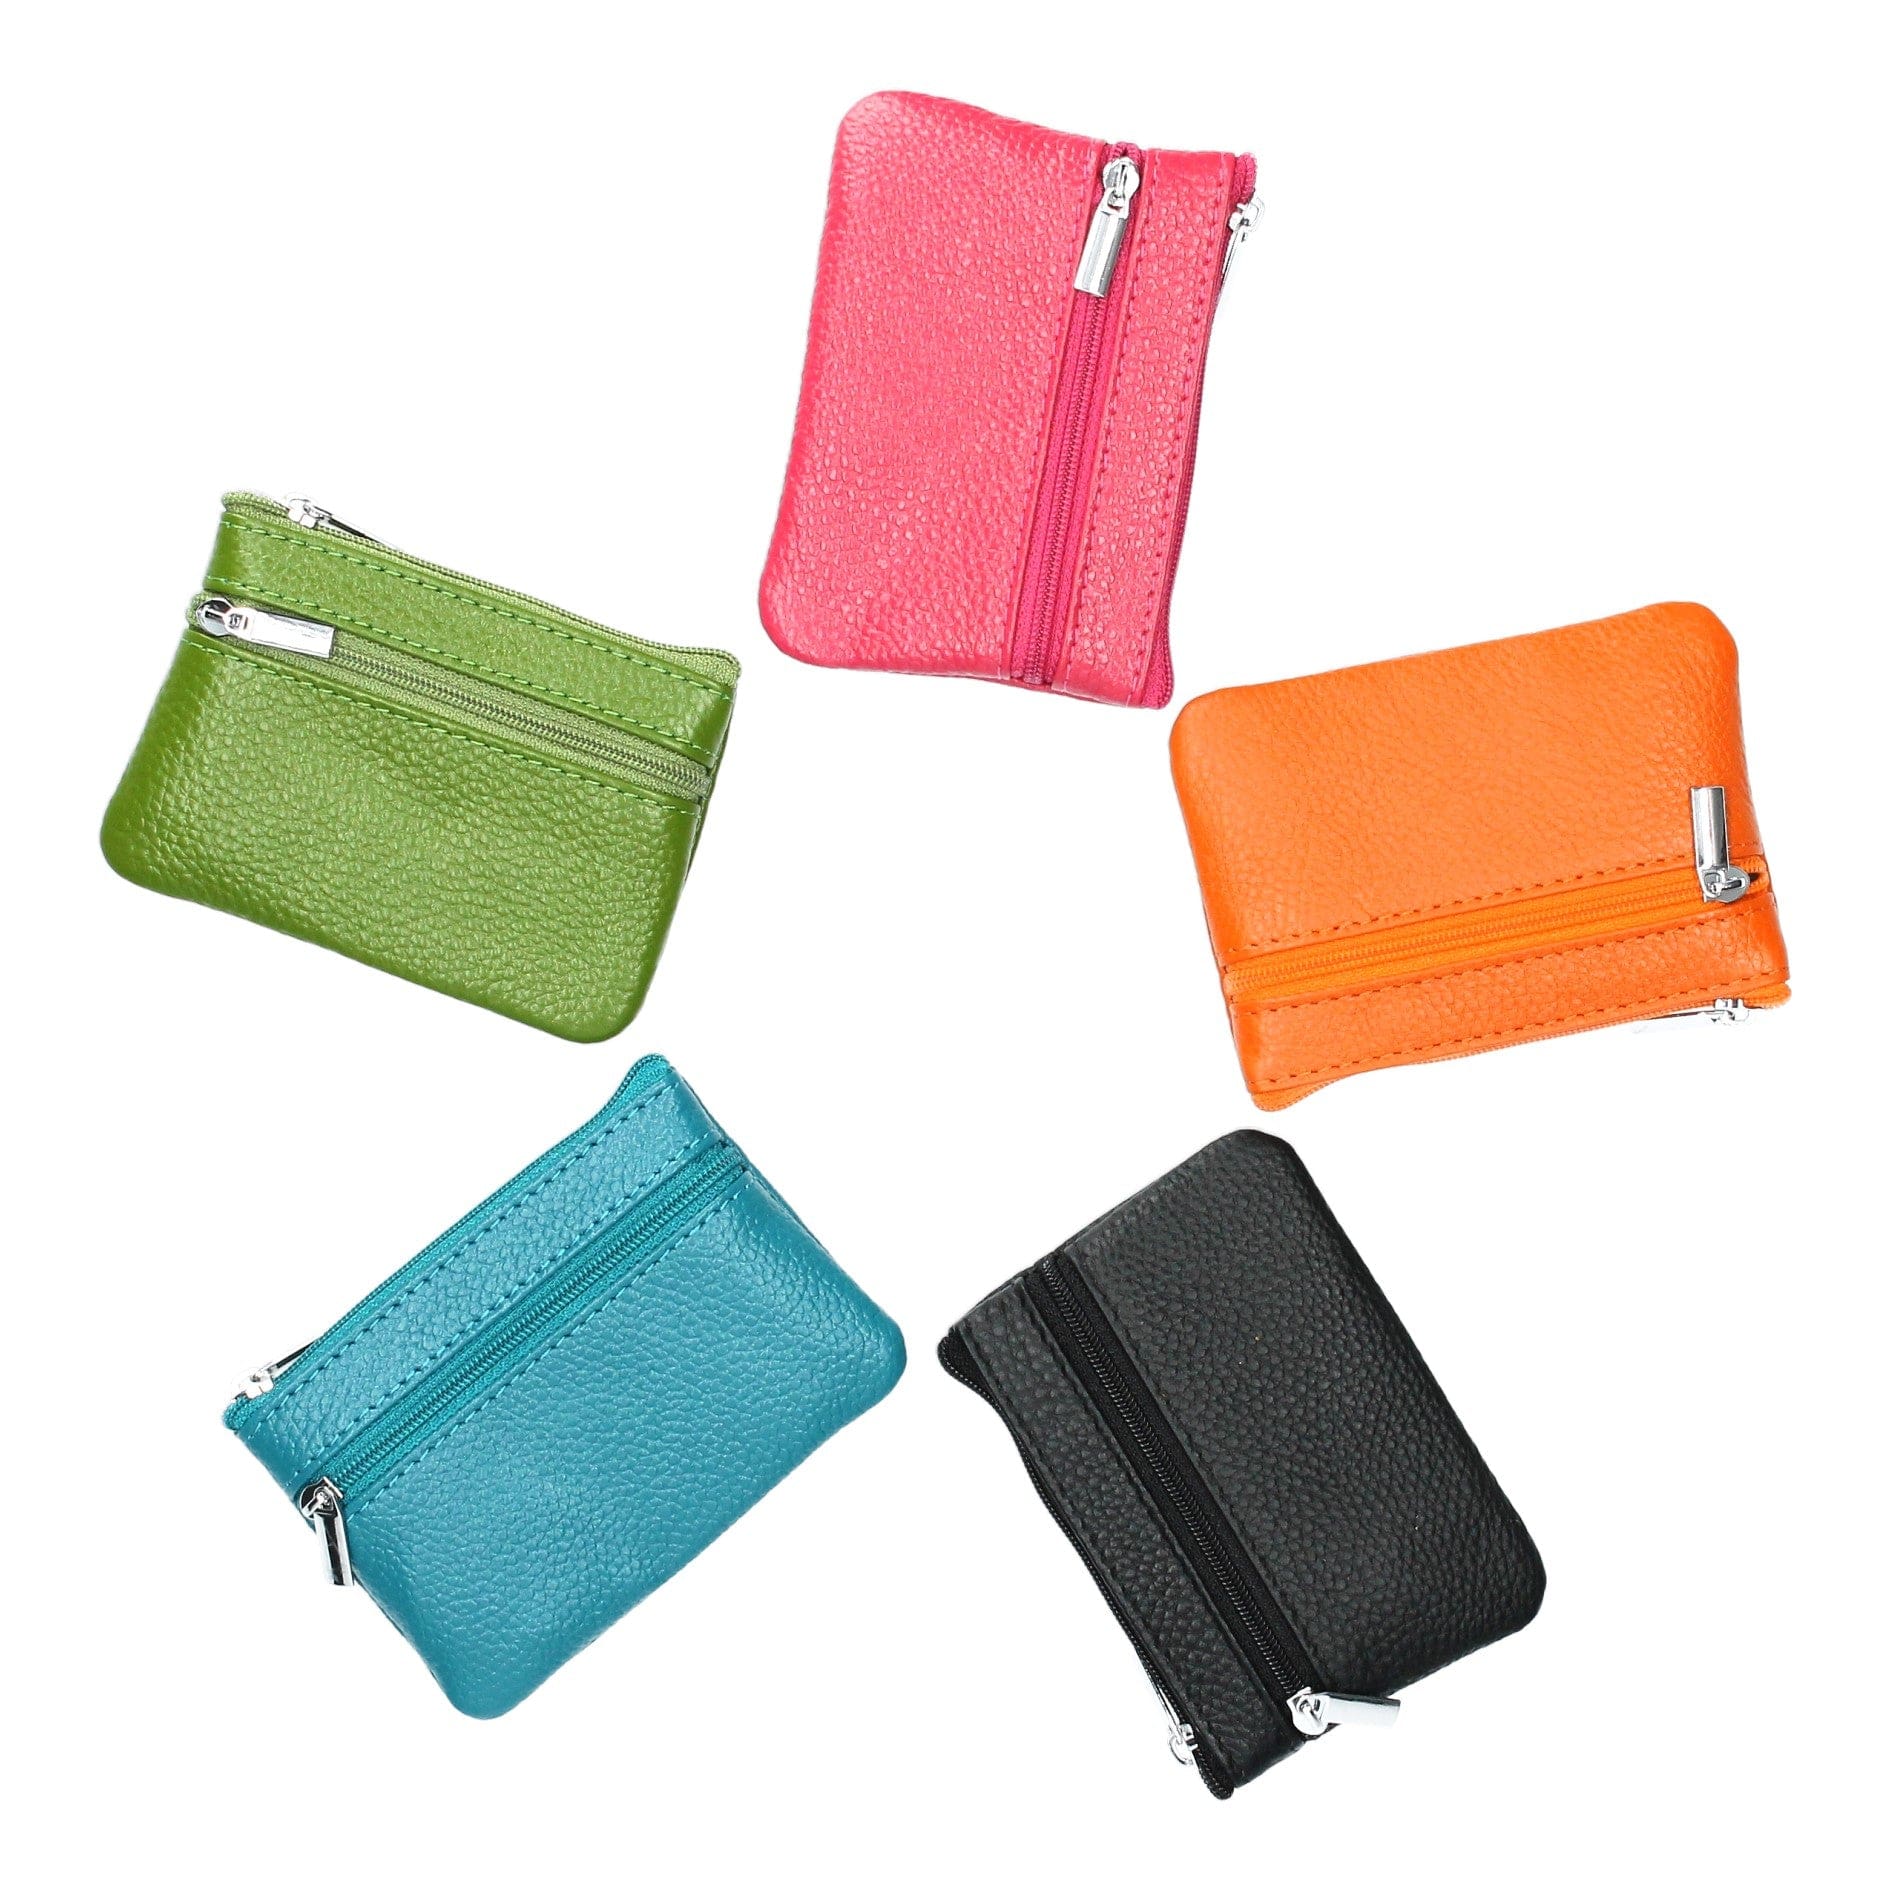 Miro plånbok - Små lädervaror